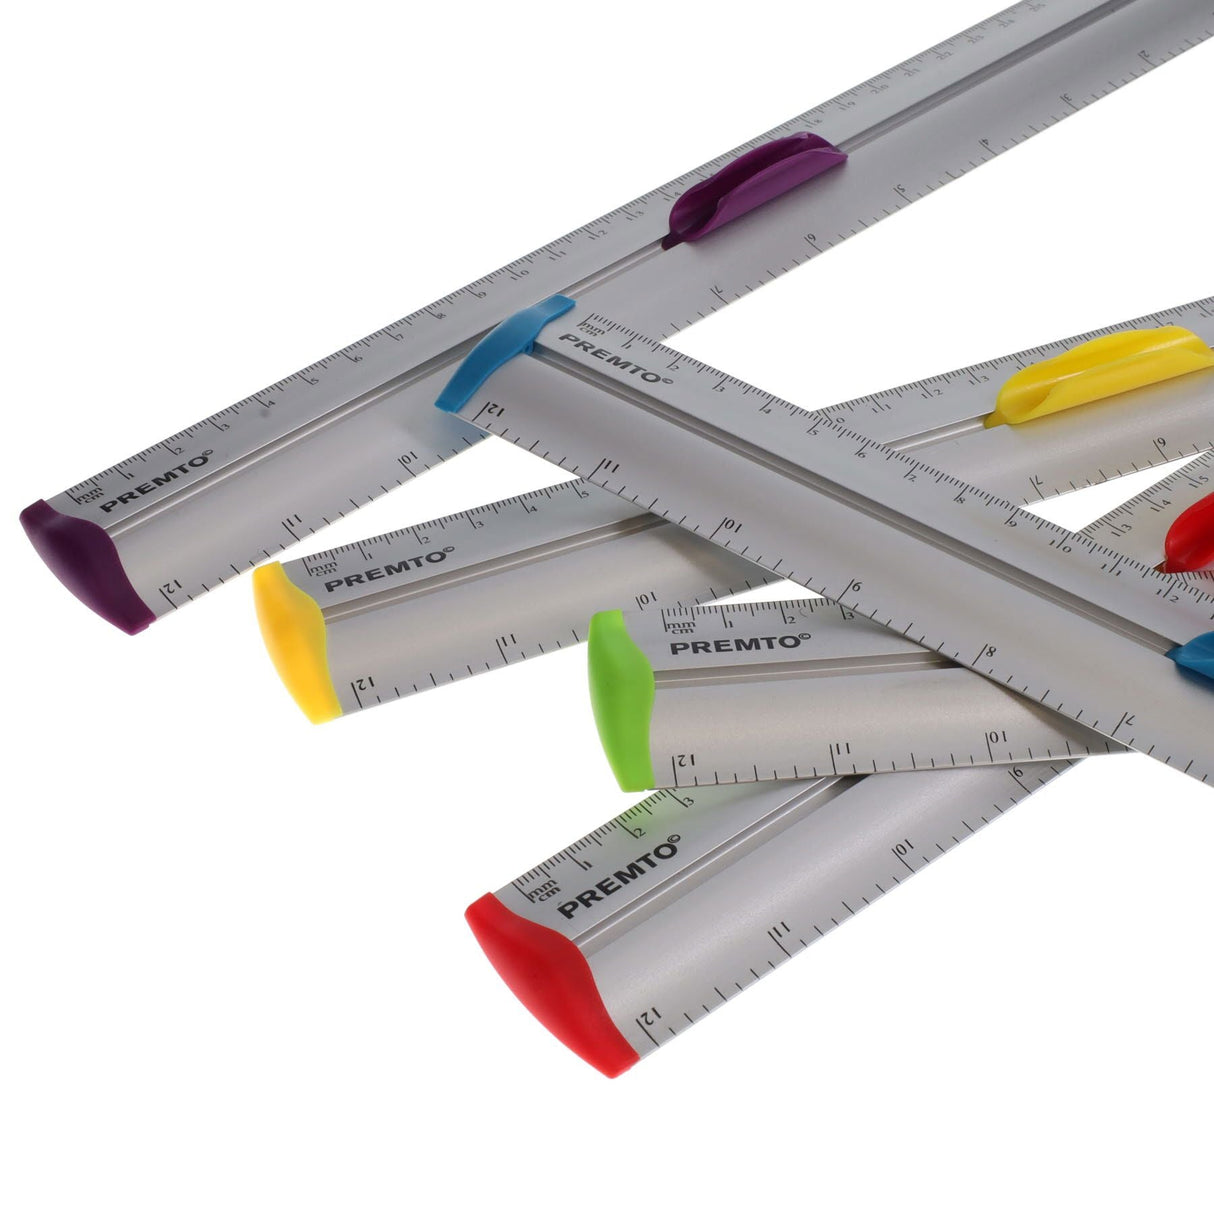 Premto S1 Aluminum Ruler With Grip 30cm - Ketchup Red-Rulers-Premto|StationeryShop.co.uk